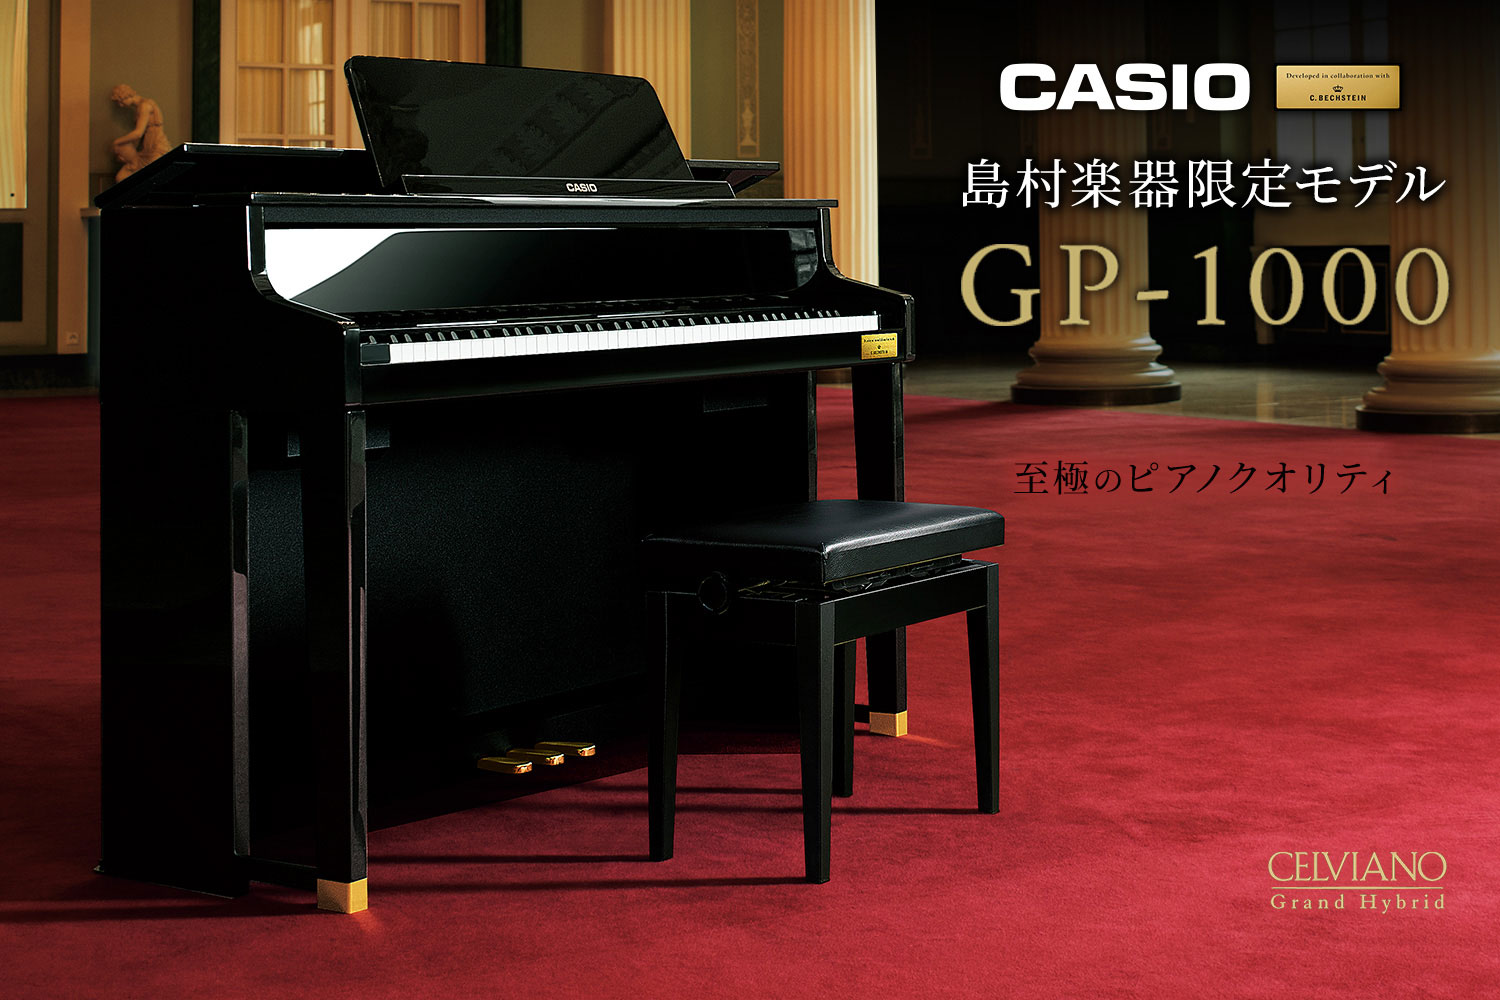 [https://www.shimamura.co.jp/shop/fukuoka/piano-keyboard/20171101/678:title=] *グランドピアノに徹底的にこだわった至極のクオリティ ピアノ作りの伝統を徹底的に研究、そしてカシオの革新的なデジタル技術を投入した、カシオセルヴ […]